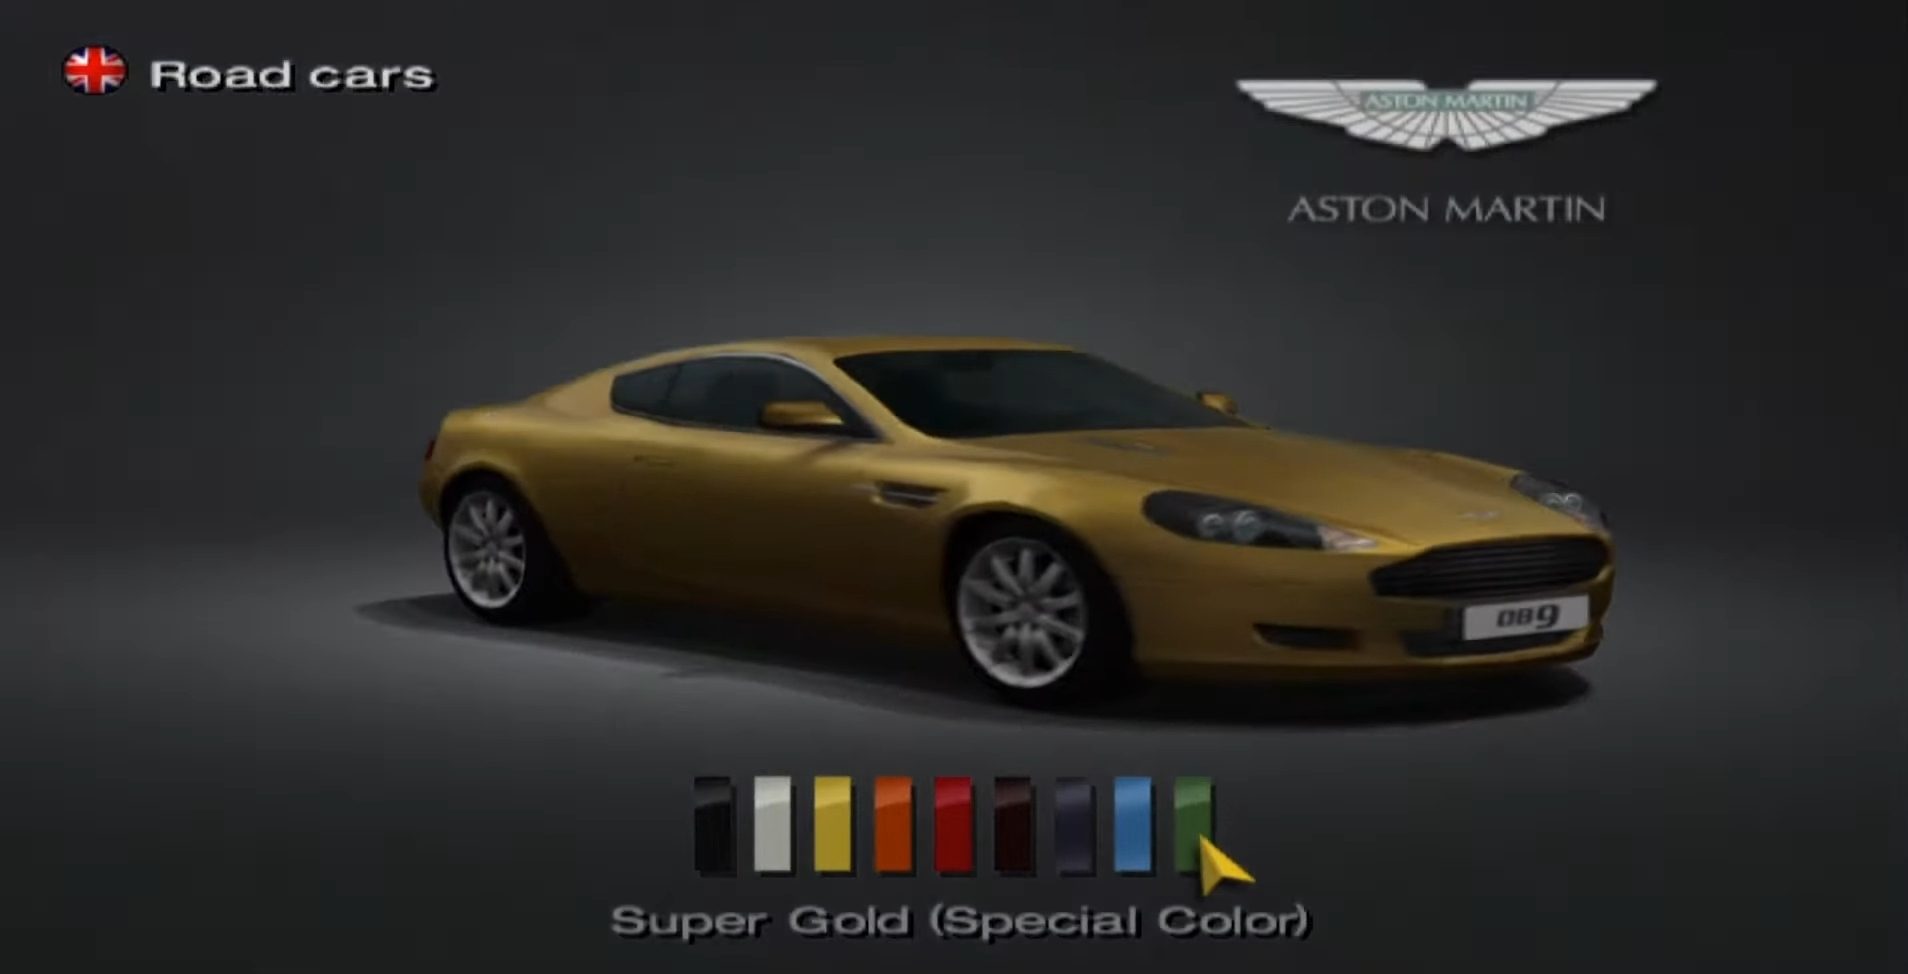 Aston Martin DB9 Coupe '03 Super Gold.jpg